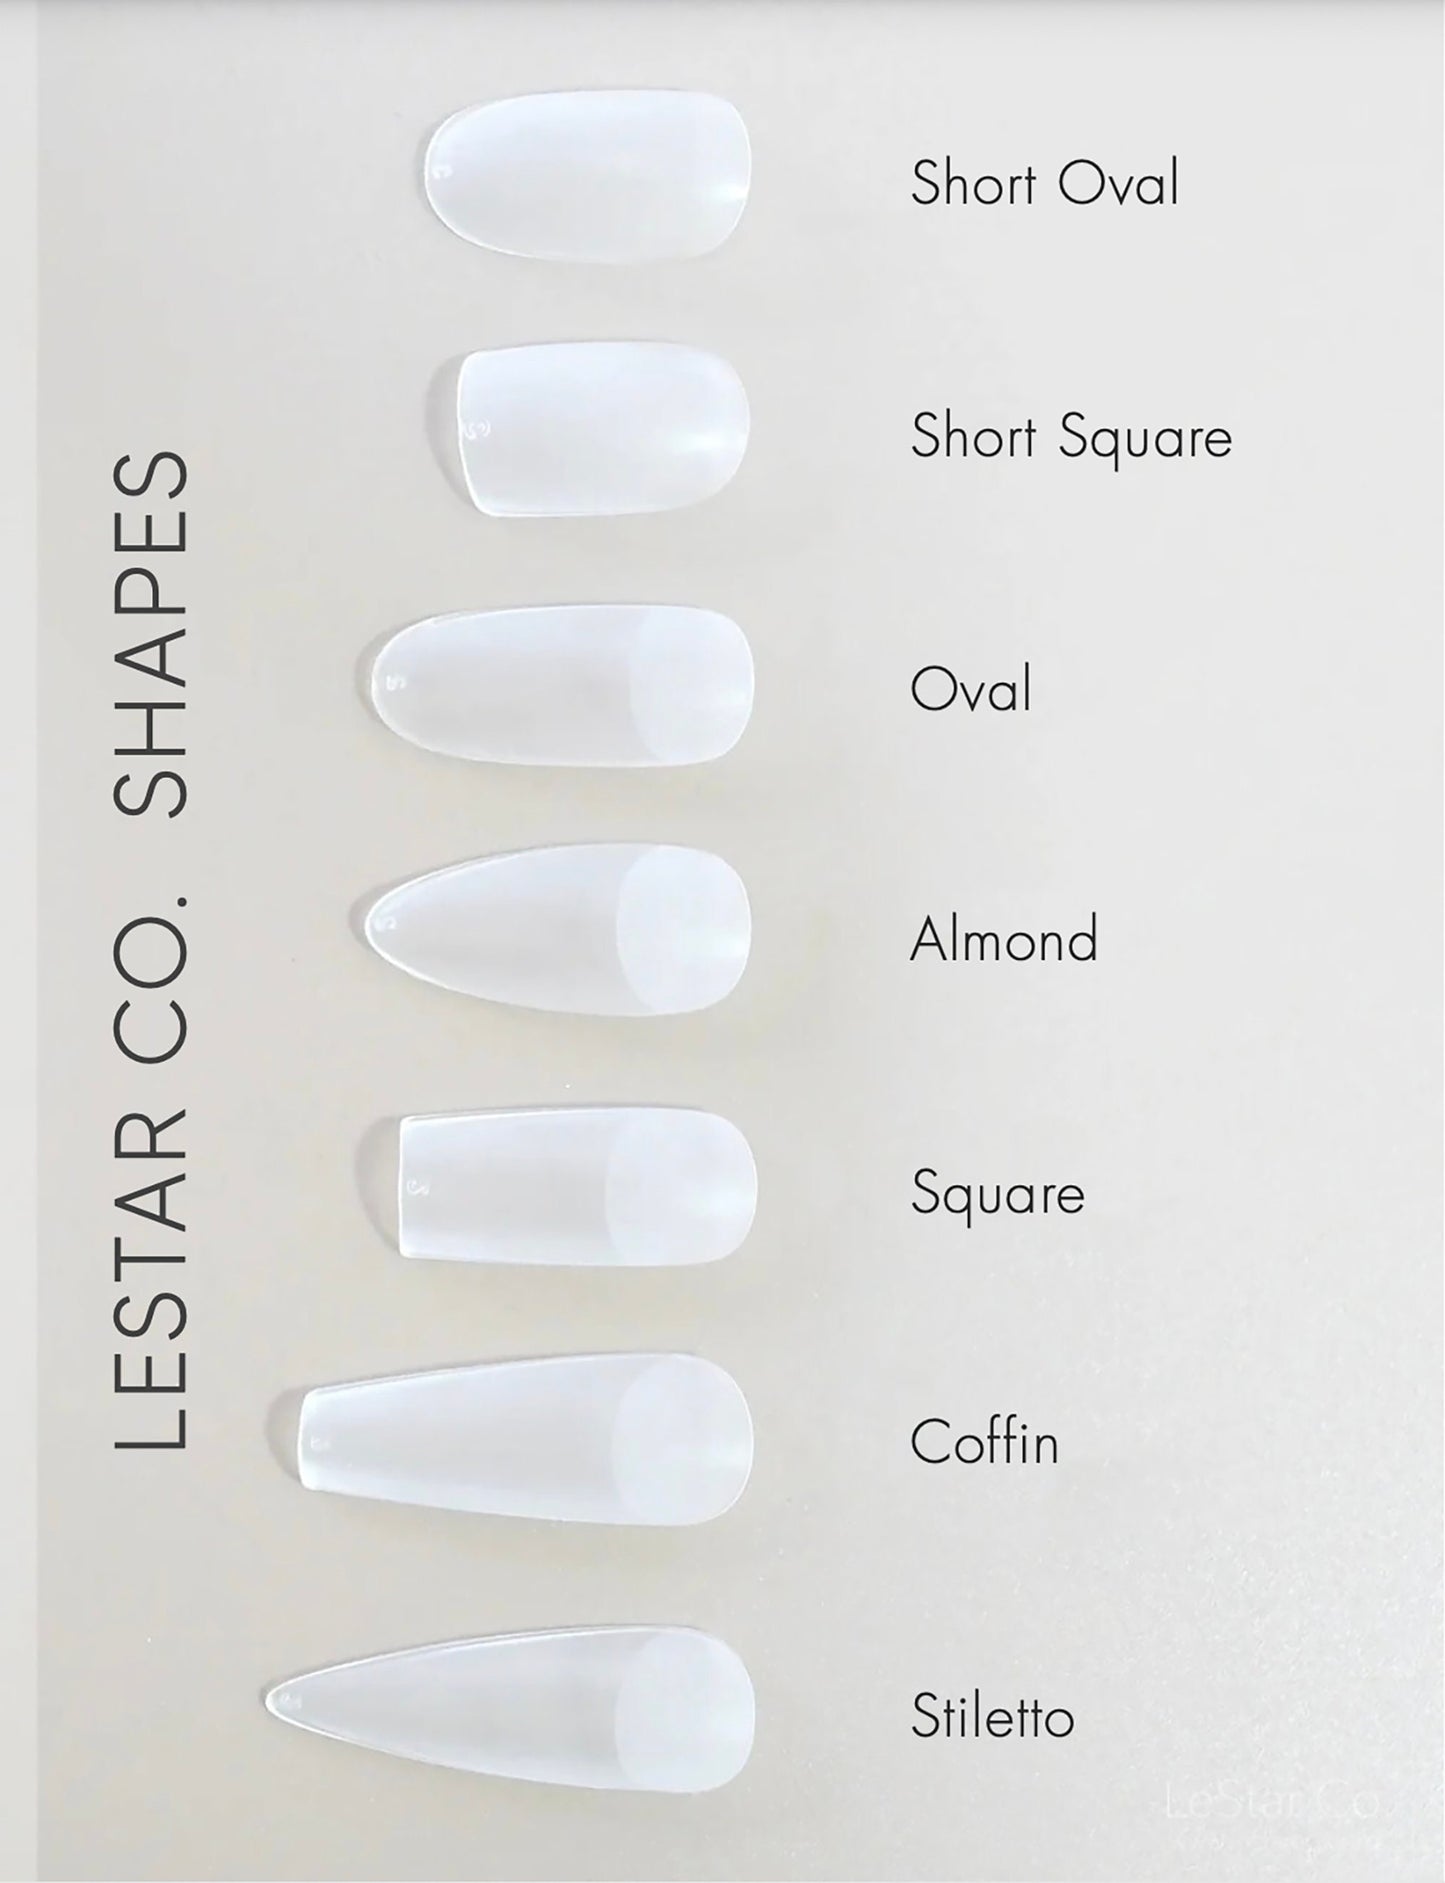 Reusable Green Purple Polar lights | Nails Premium Short Press on Nails Gel Manicure | Fake Nails | Handmade | Lestarco faux nails TMR360